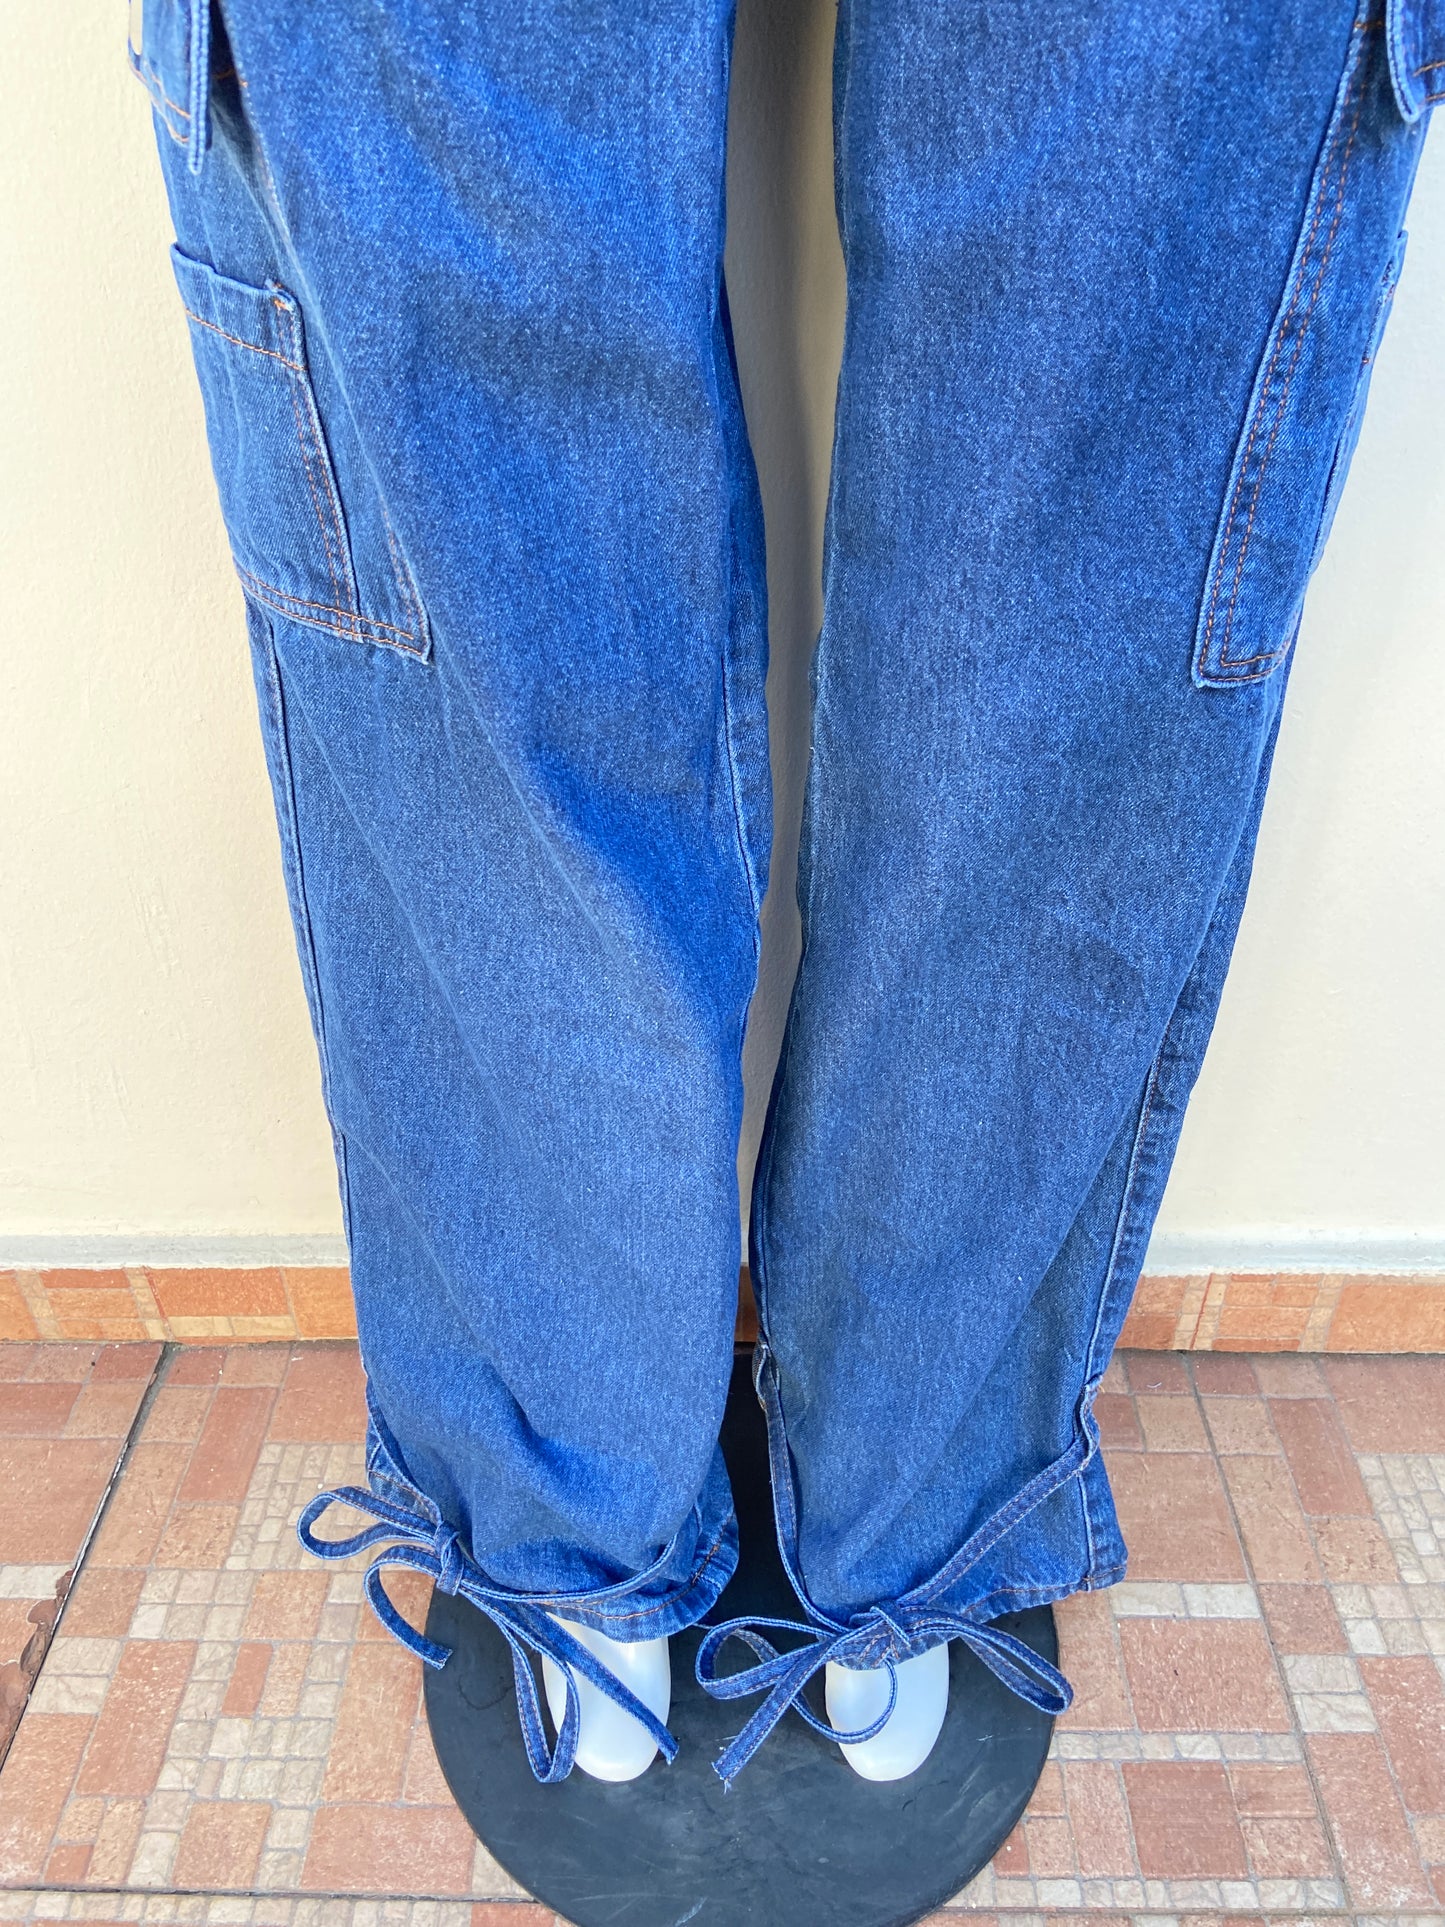 Pantalón Jean Fashion Nova original azul marino, estilo cargo, con lazos en la parte inferior.